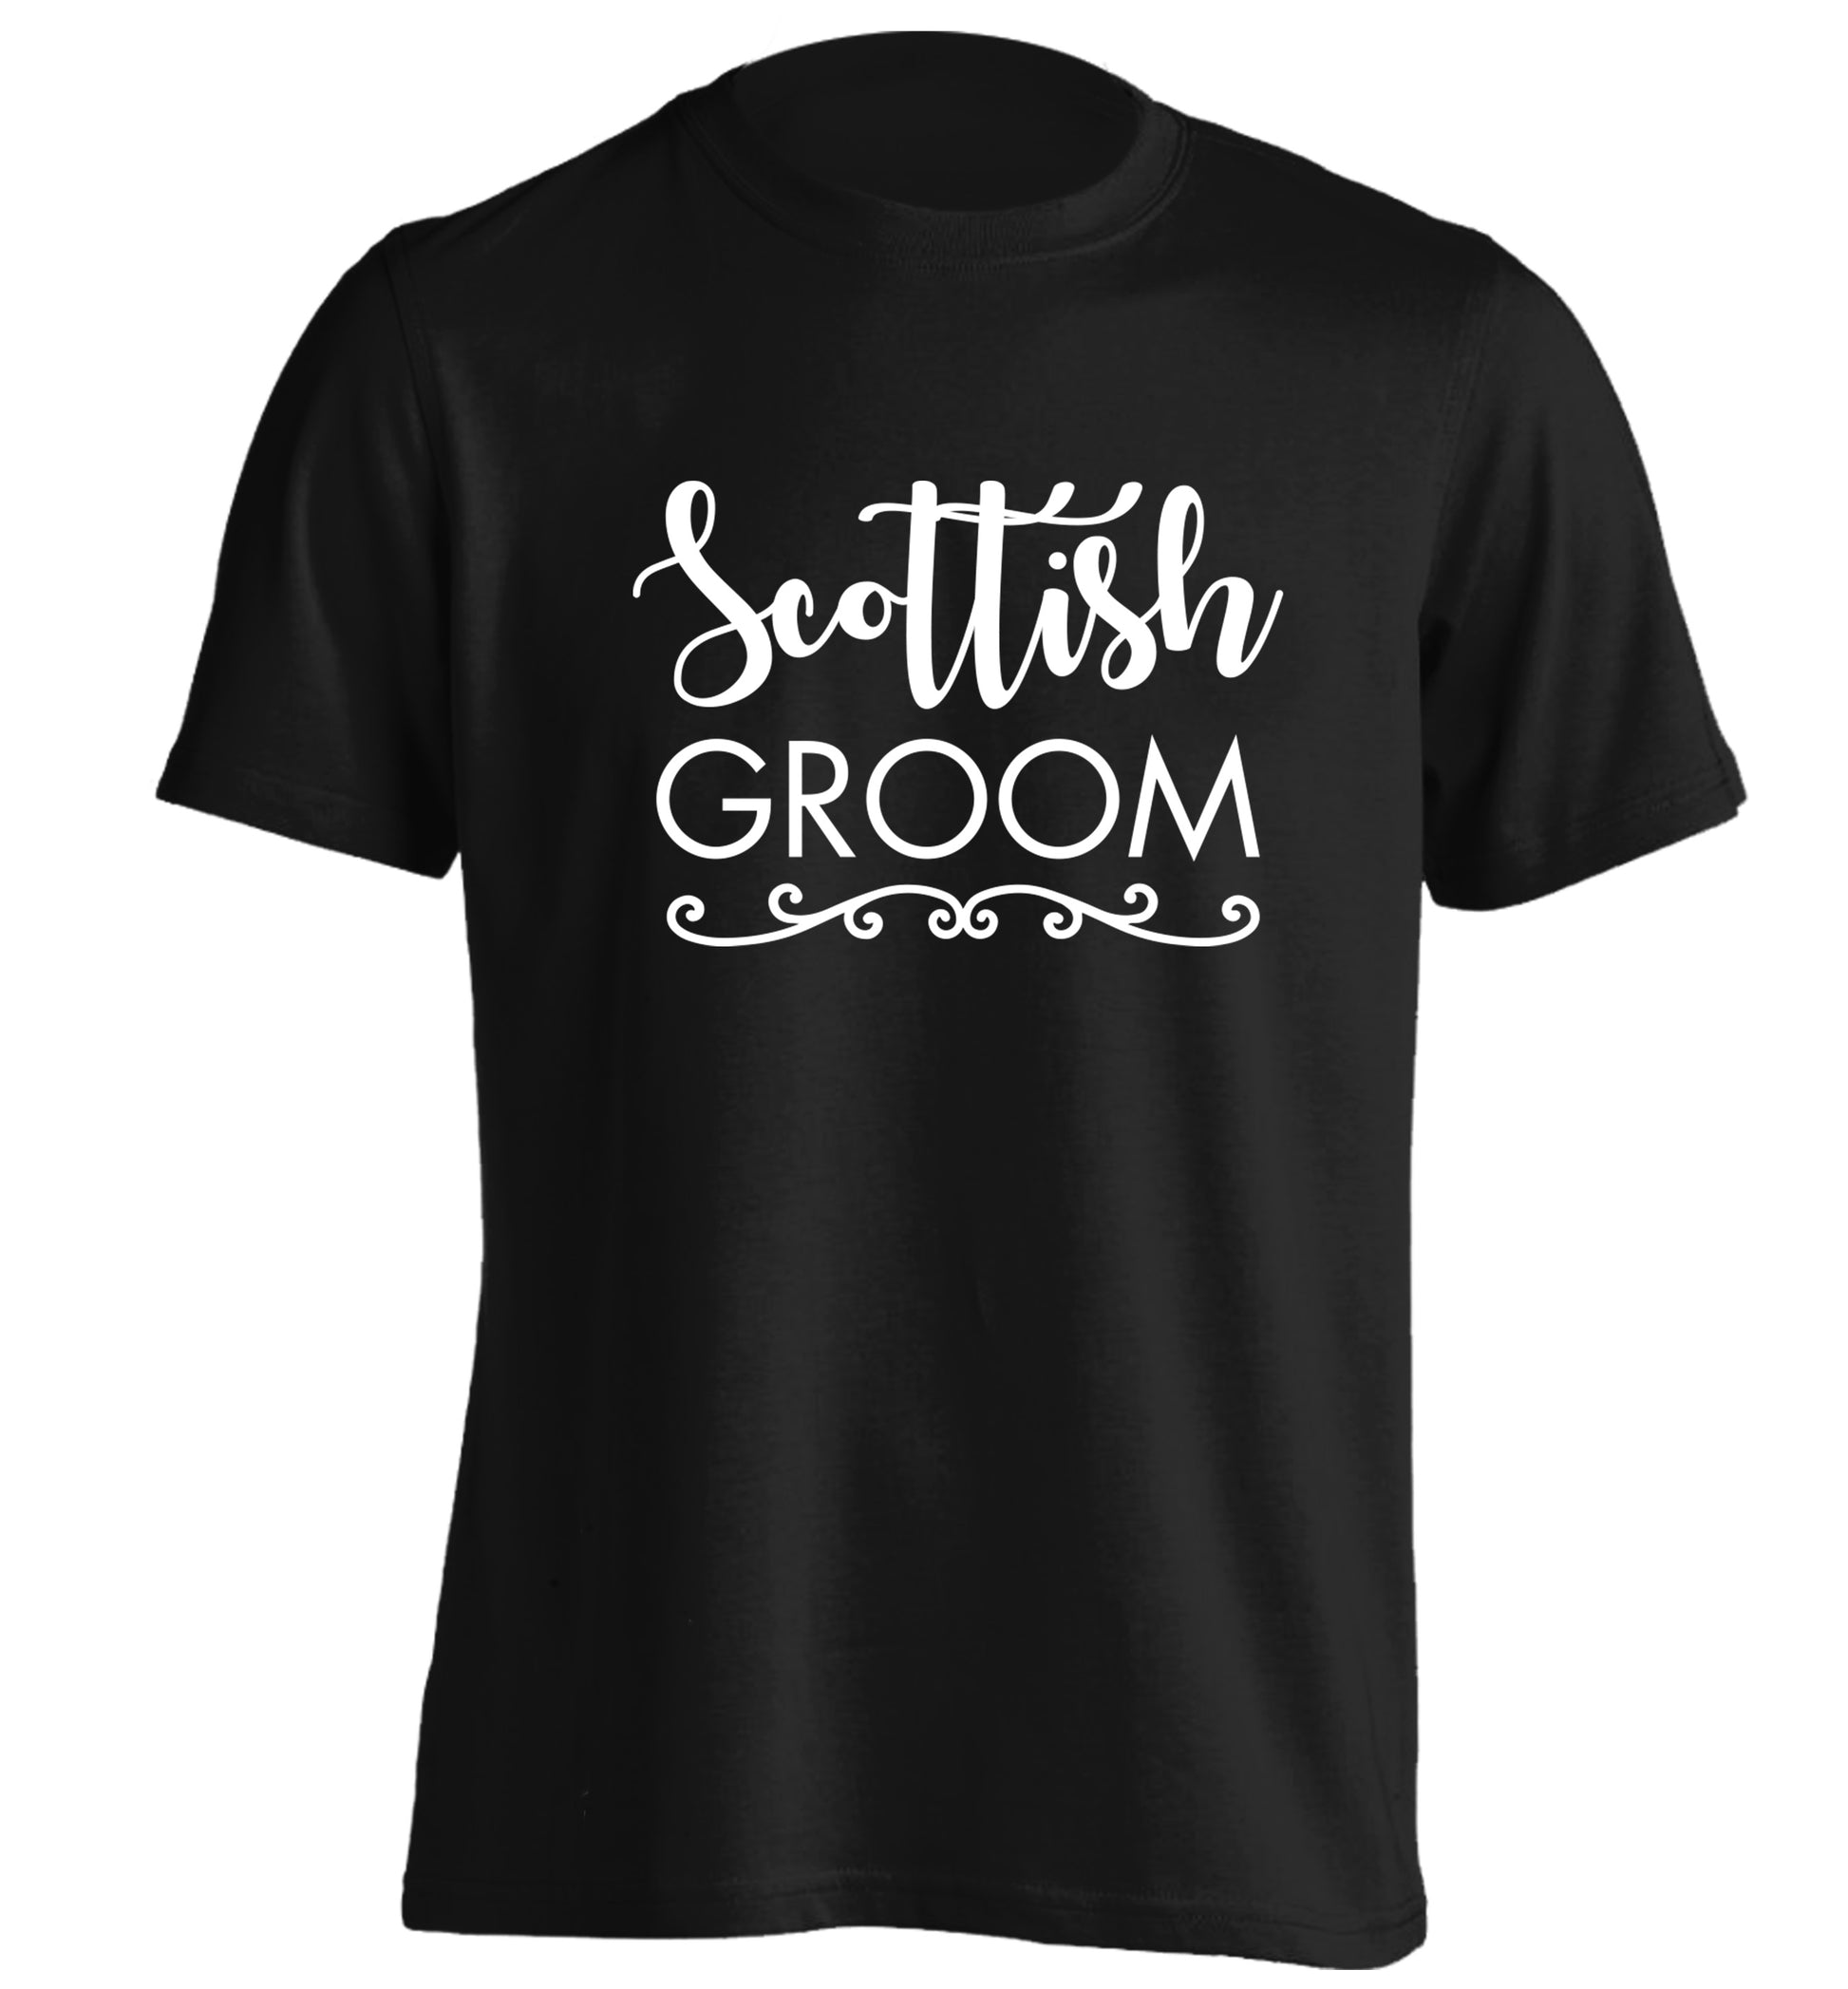 Scottish groom adults unisex black Tshirt 2XL